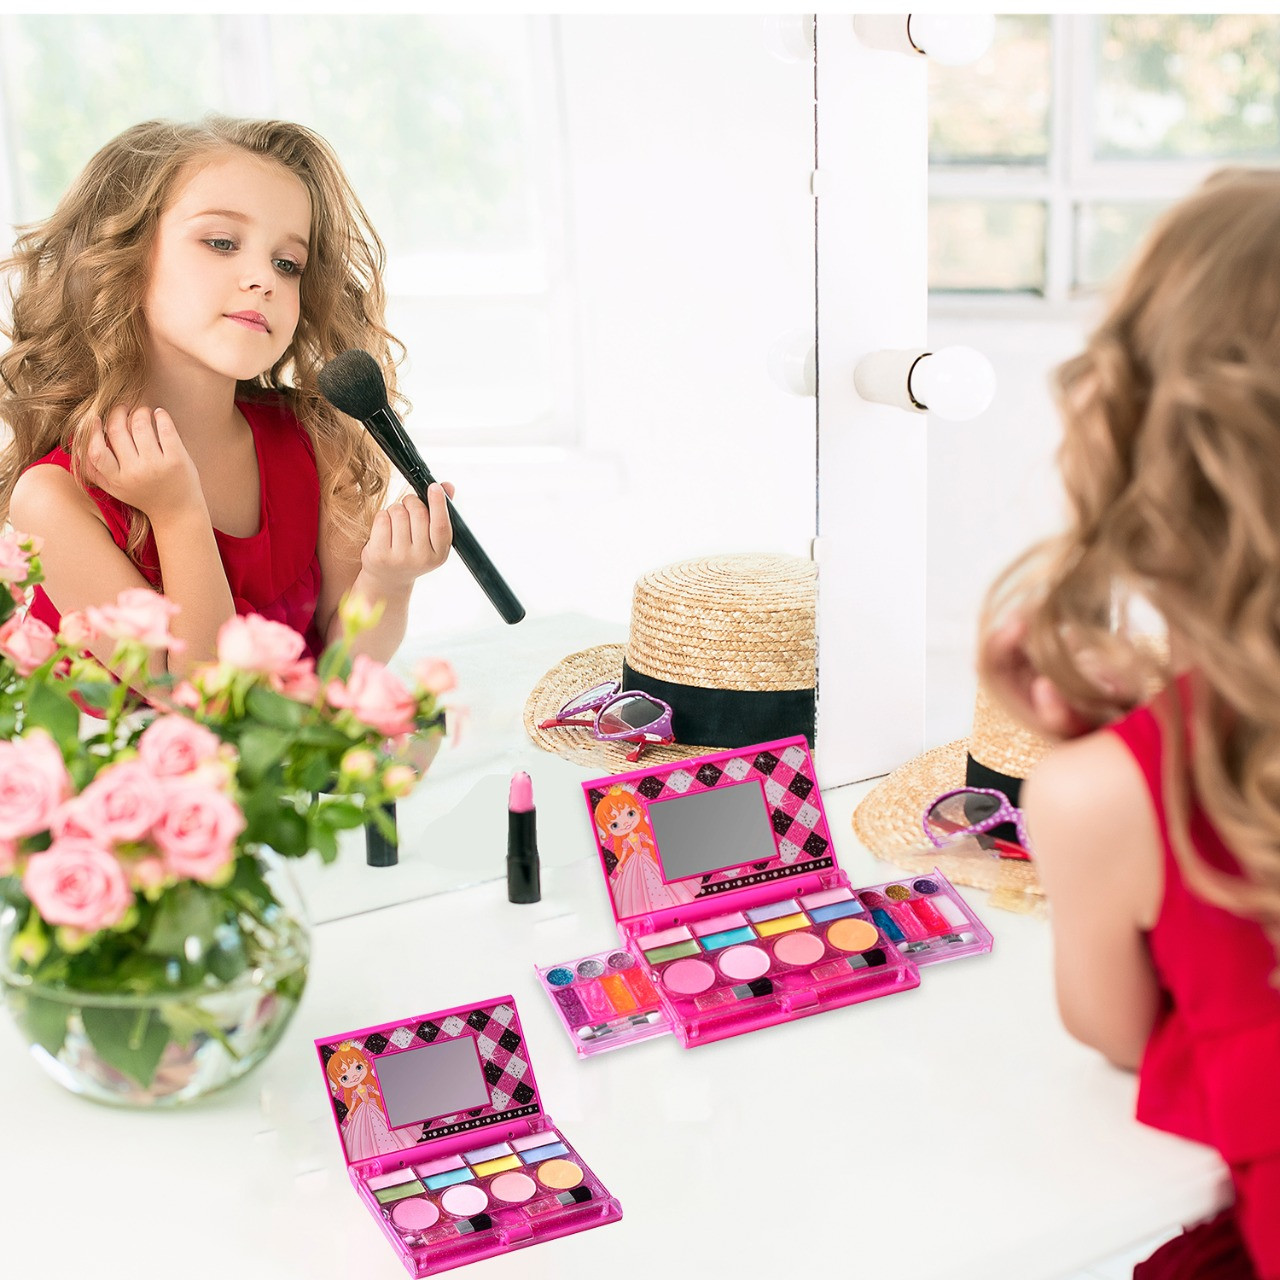 Children's Puzzle Toy Princess Makeup Coloring Set Girls' Dress-up